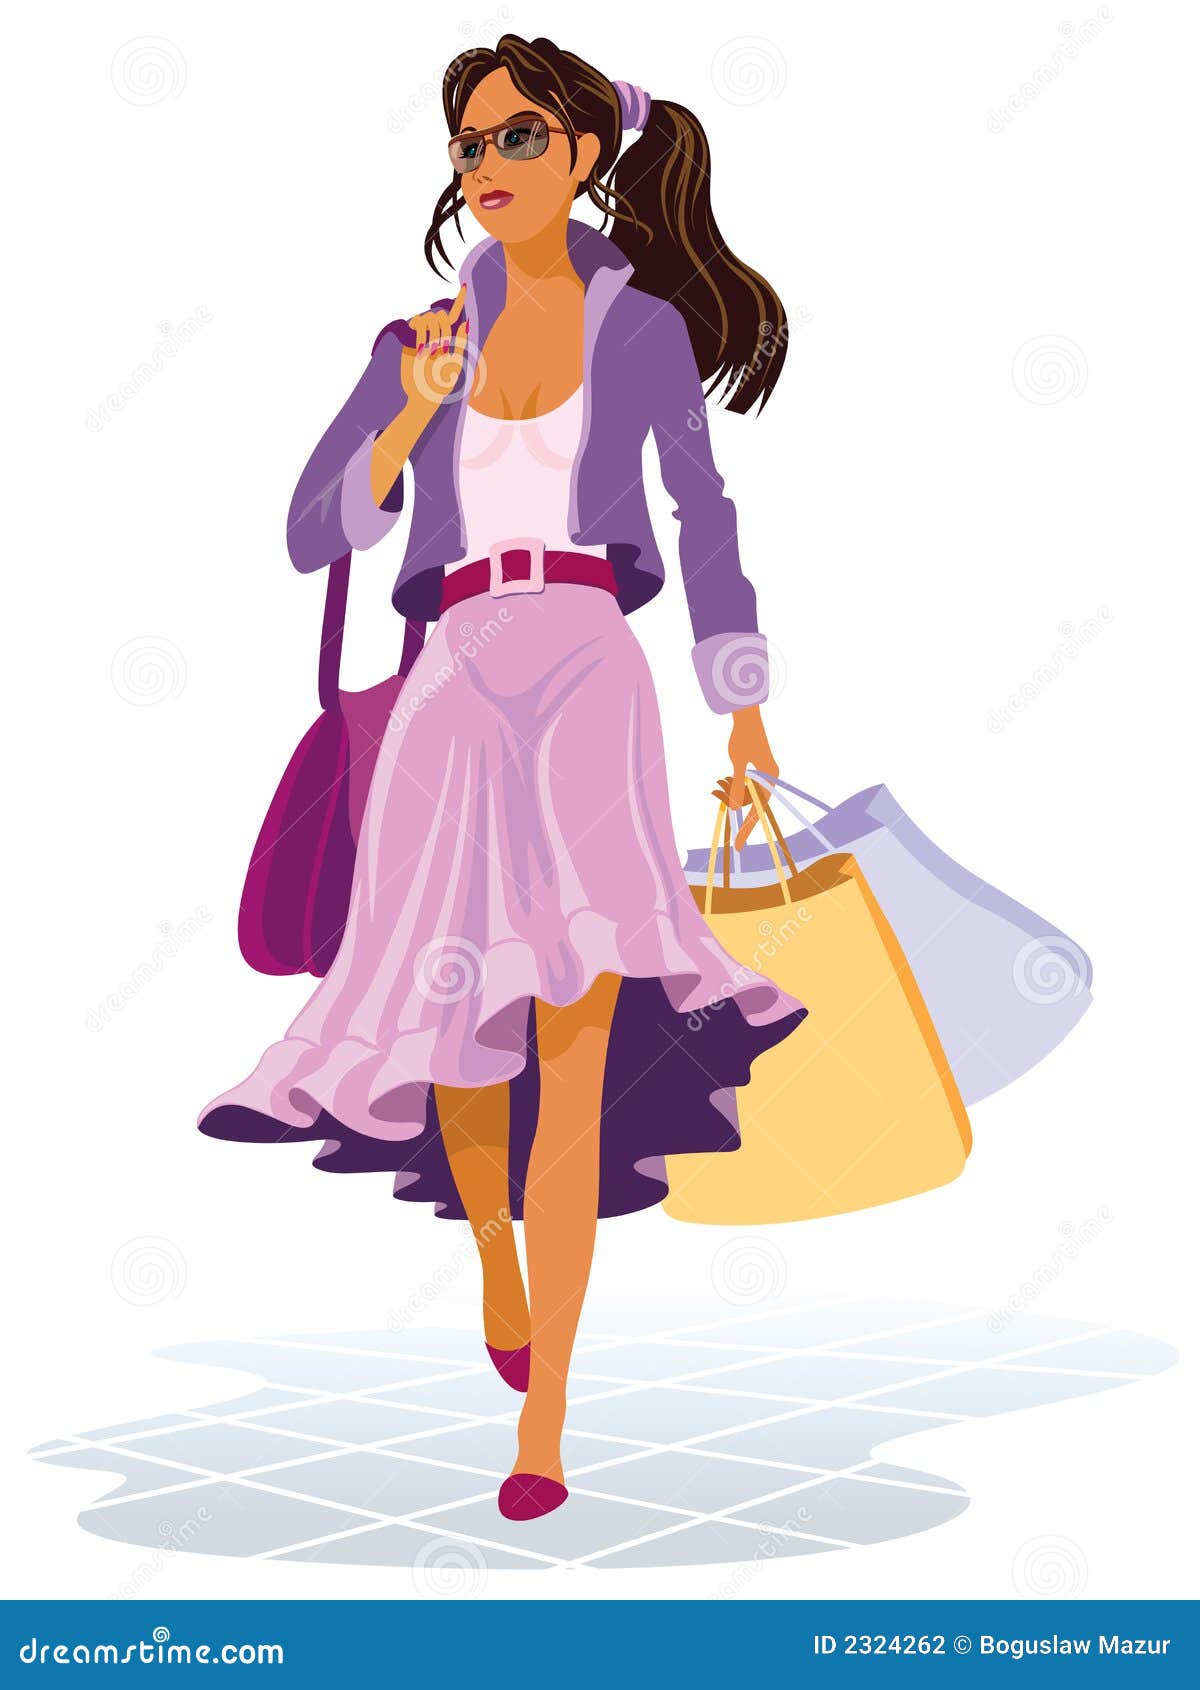 clipart shopping queen - photo #8